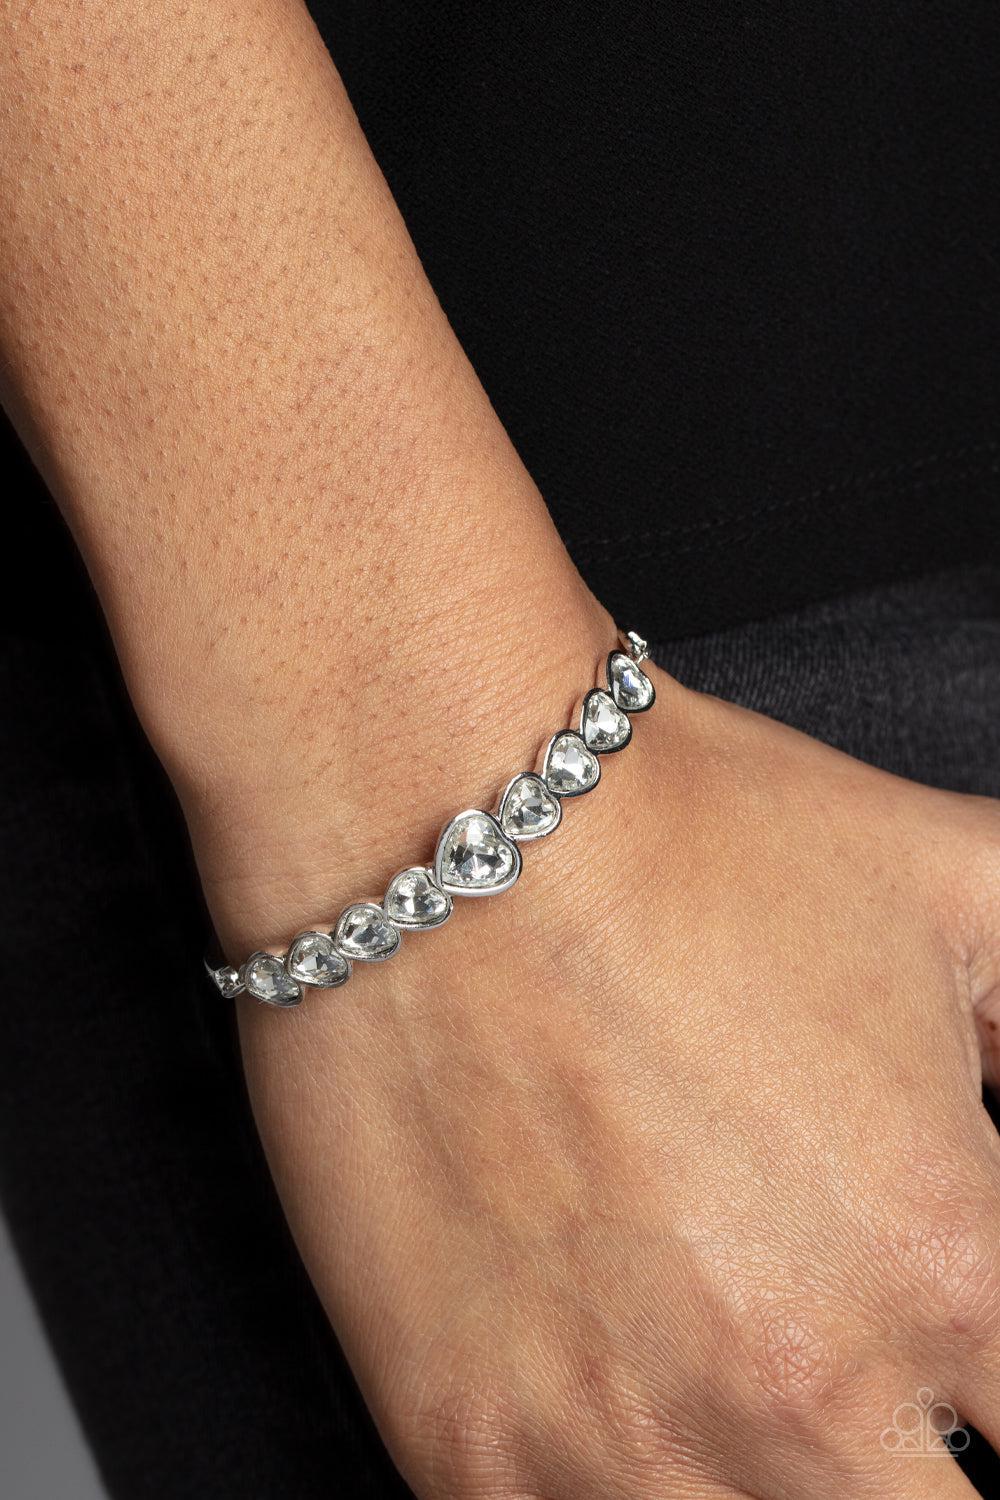 Lusty Luster White Rhinestone Heart Bracelet - Paparazzi Accessories- lightbox - CarasShop.com - $5 Jewelry by Cara Jewels